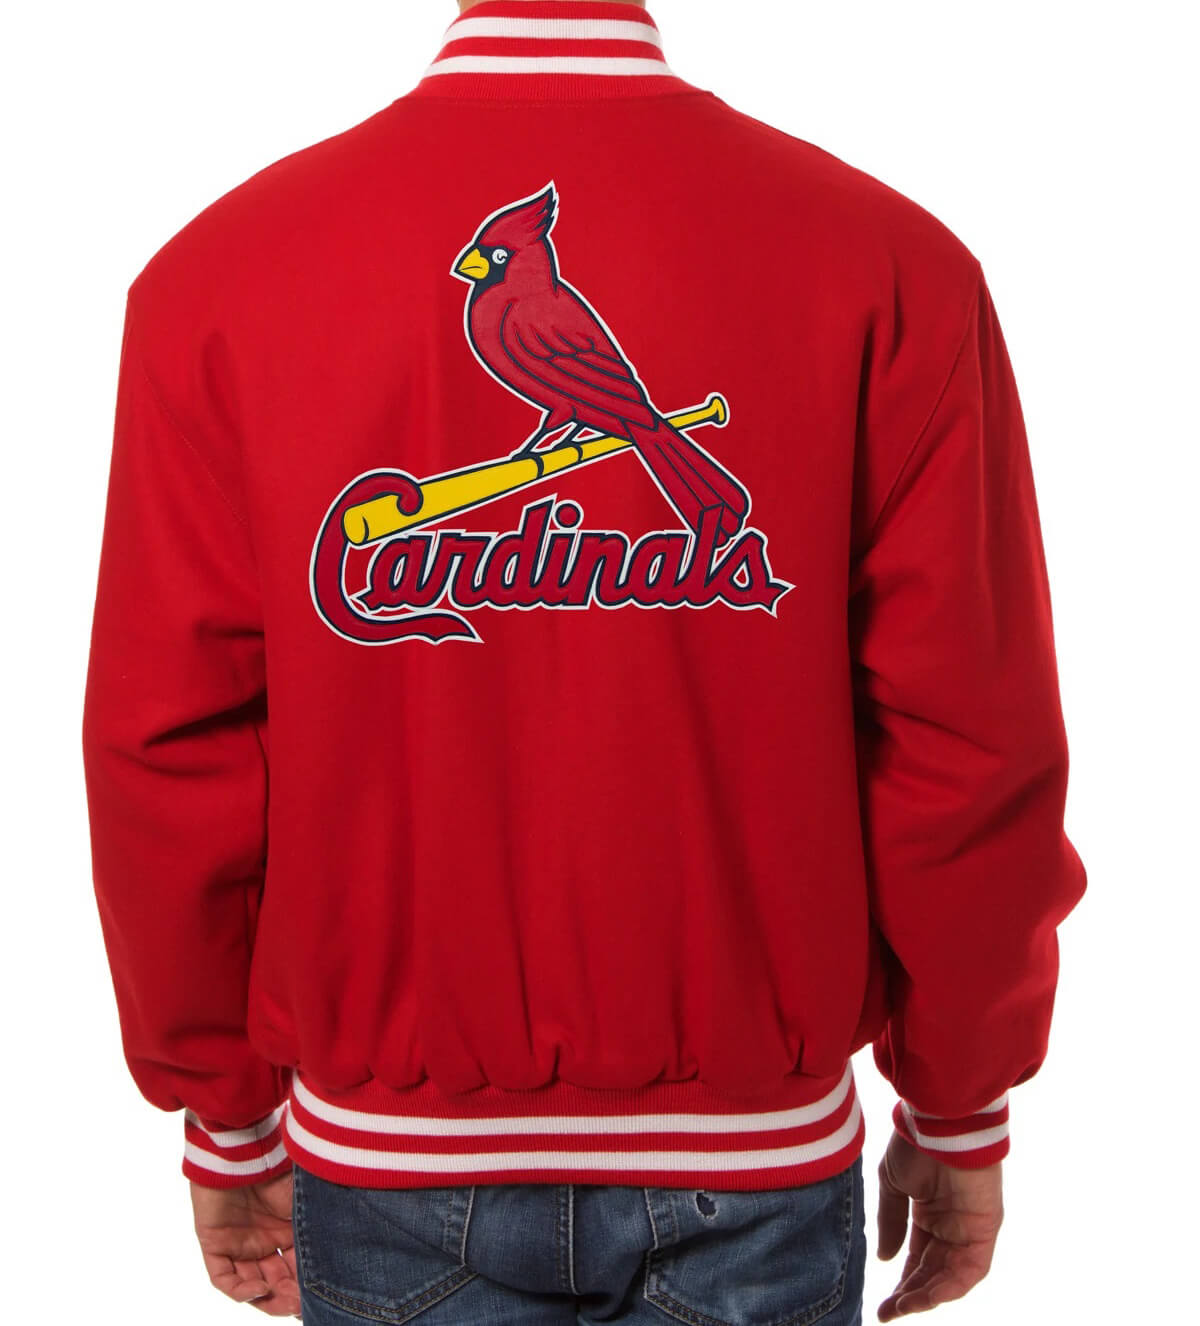 MLB Red St. Louis Cardinals Varsity Jacket - Maker of Jacket